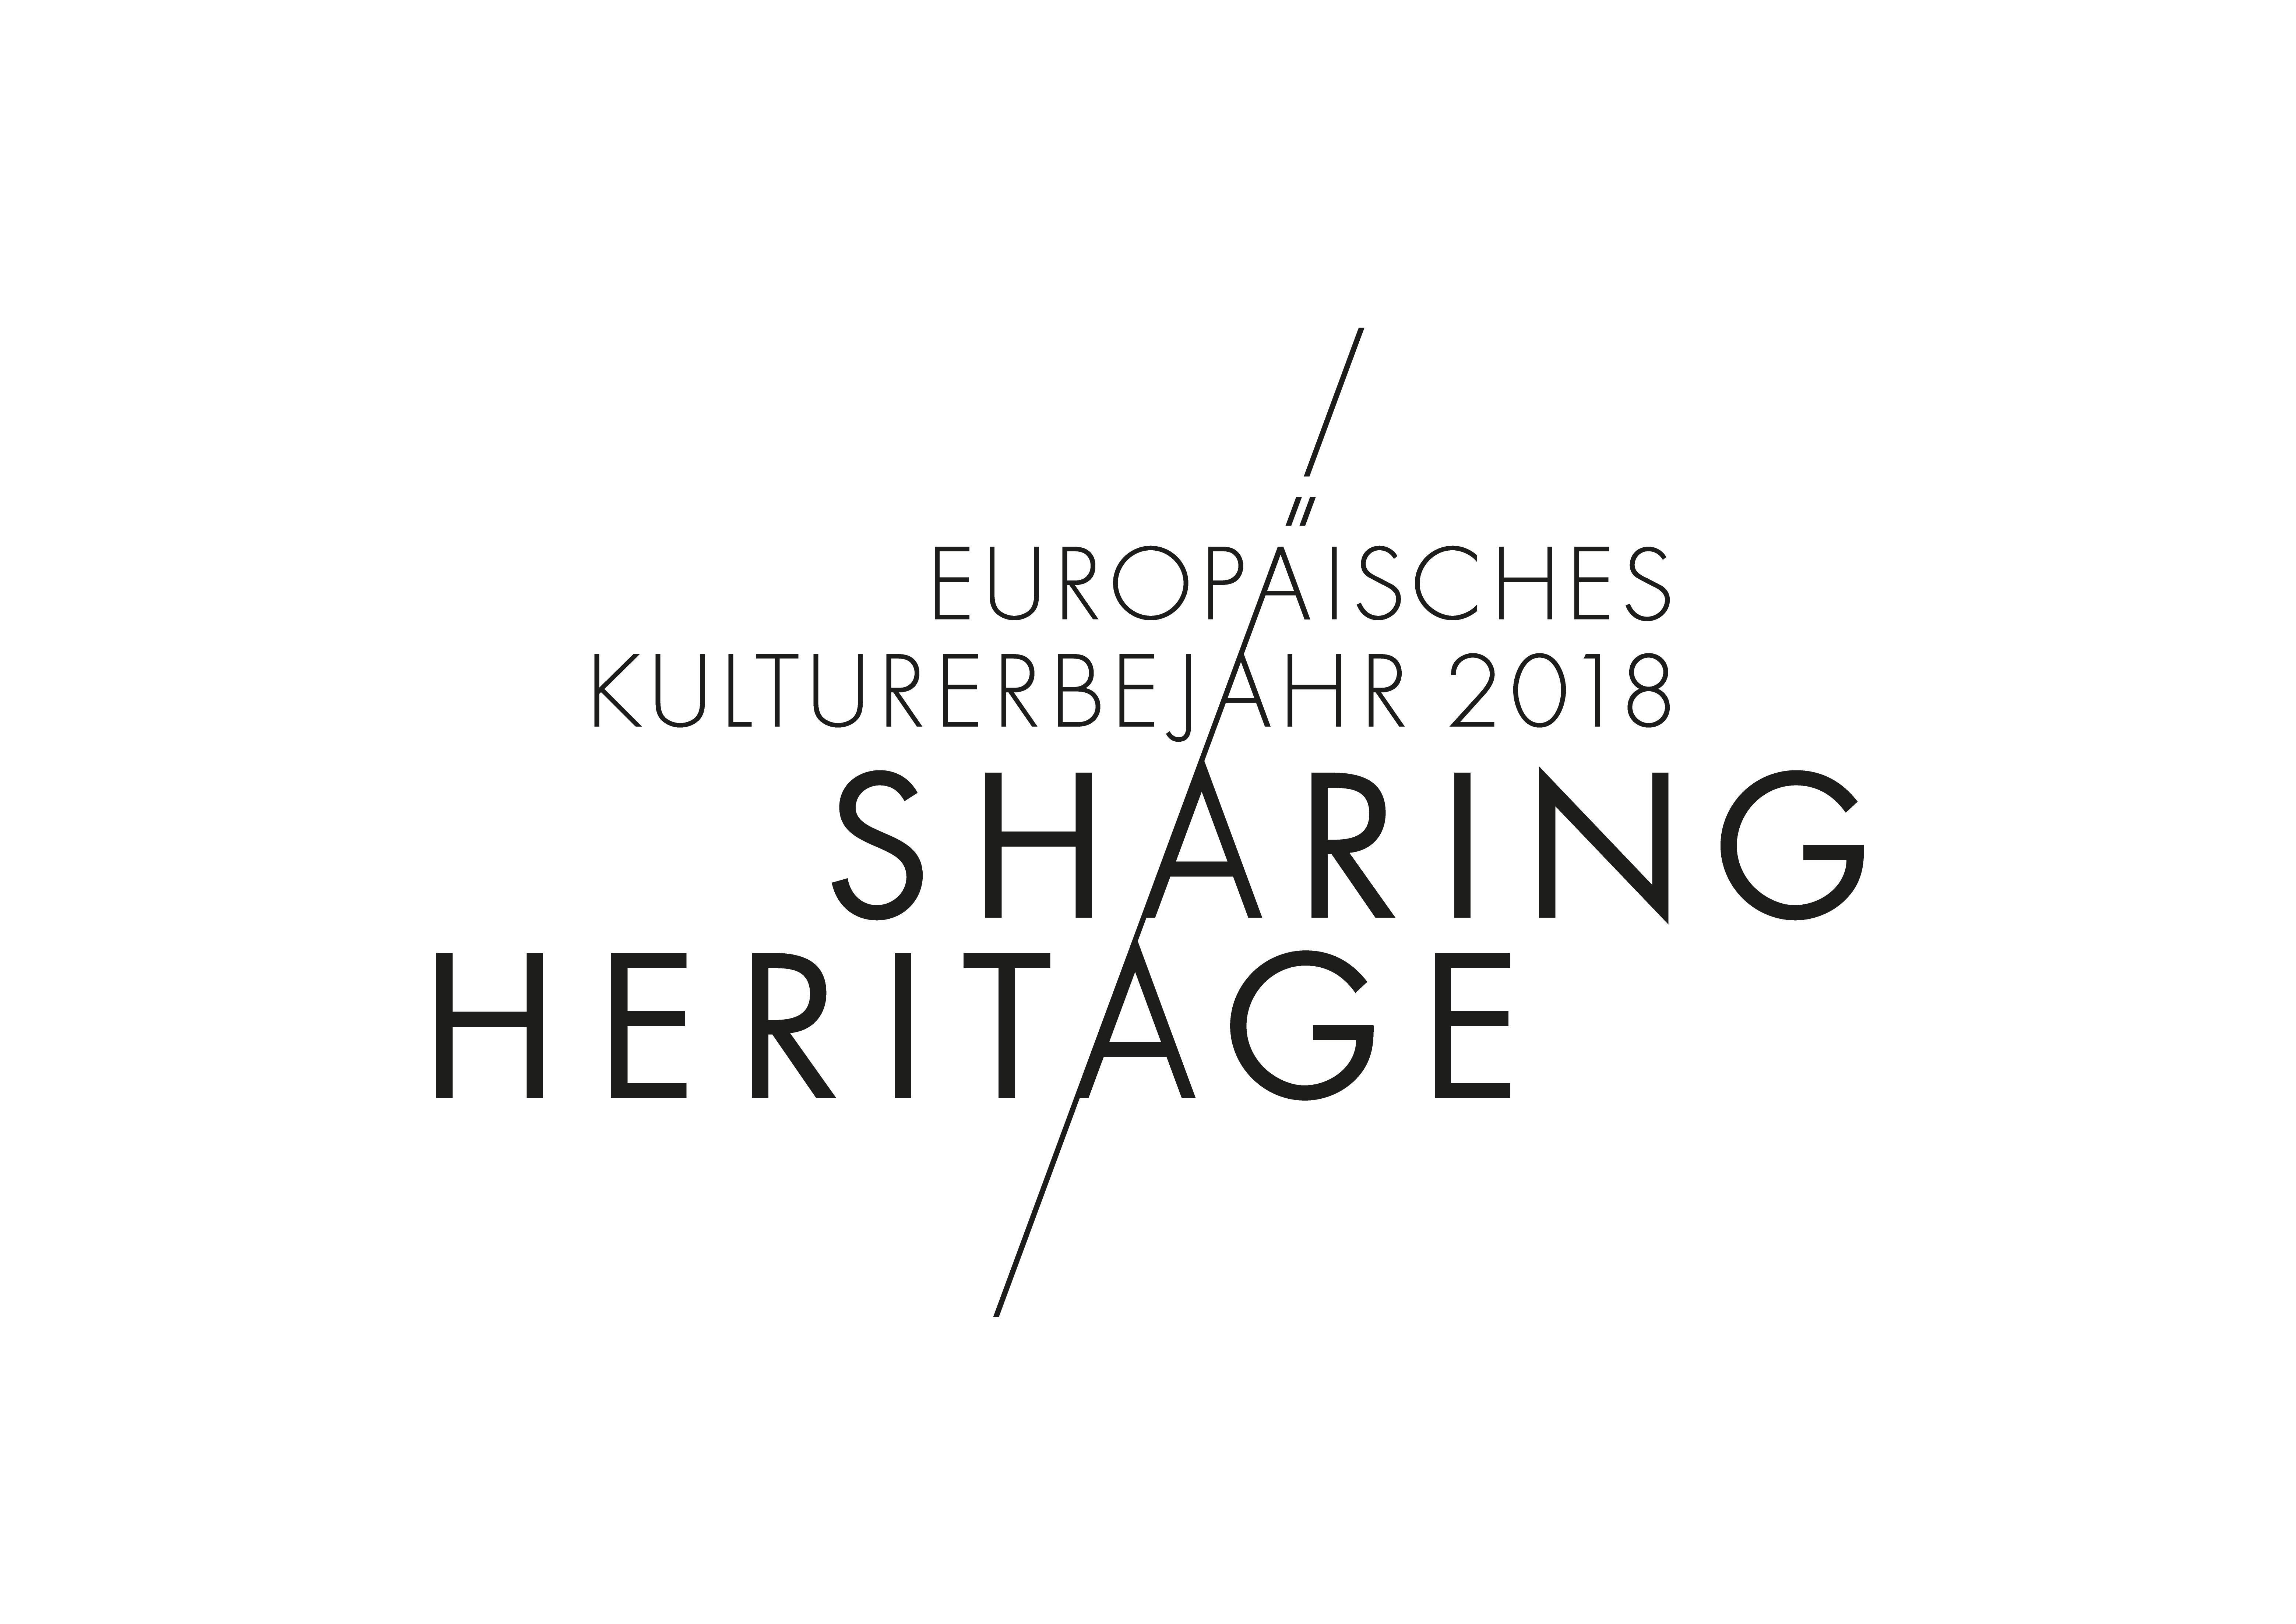 Deutsch Logo - File:Sharing Heritage Logo Deutsch.png - Wikimedia Commons